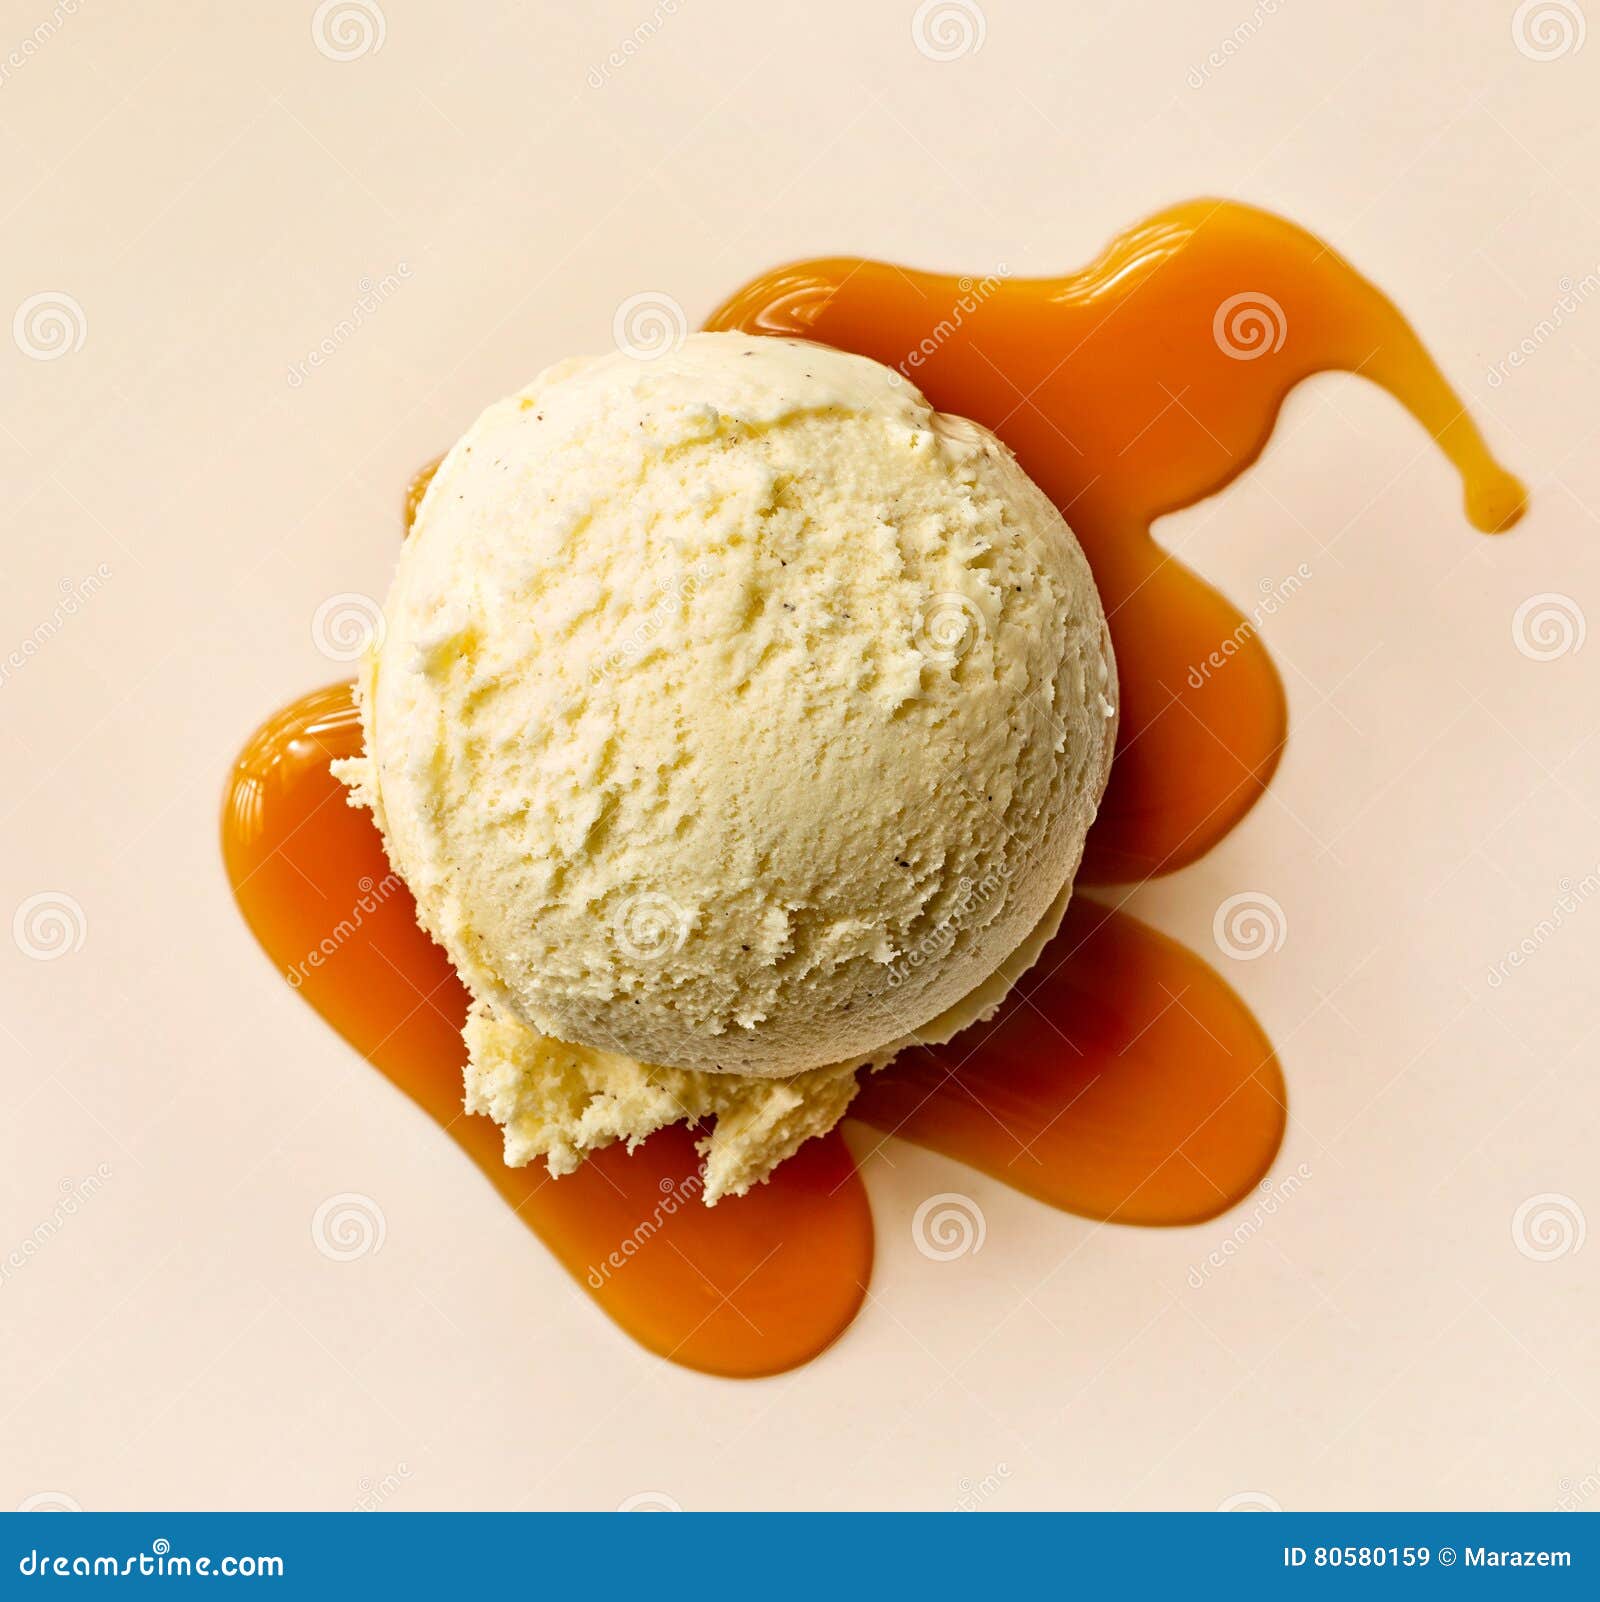 https://thumbs.dreamstime.com/z/vanilla-ice-cream-ball-caramel-sauce-beige-background-top-view-80580159.jpg